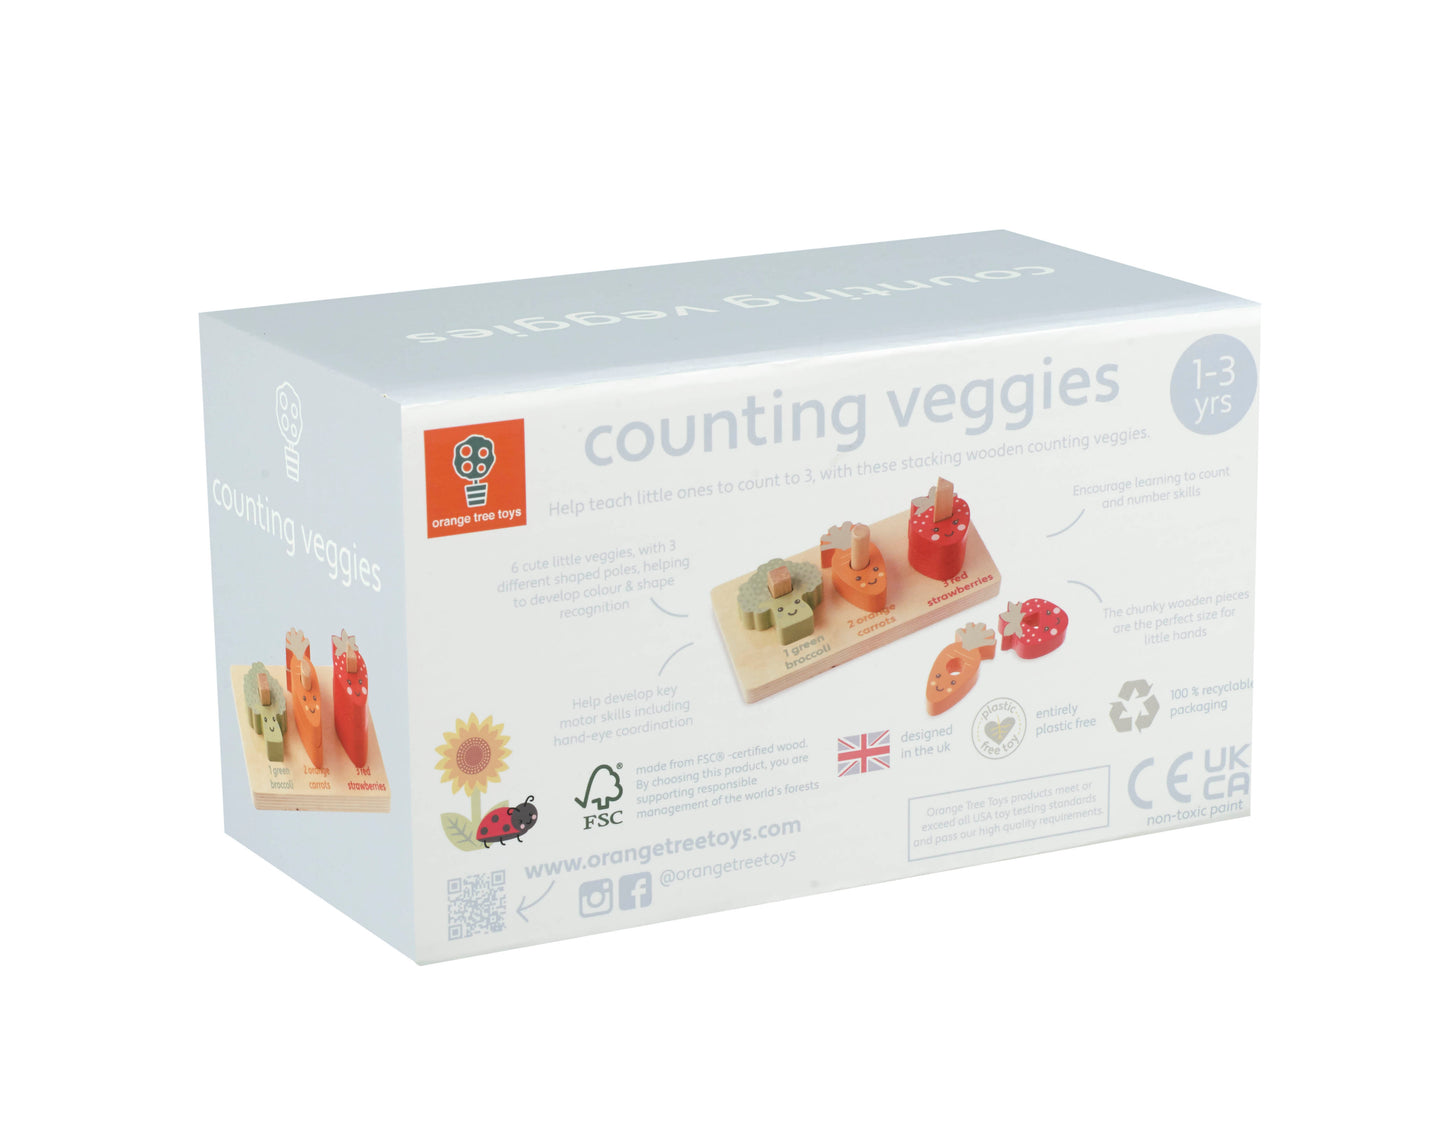 Orange Tree Toys Counting Veggies